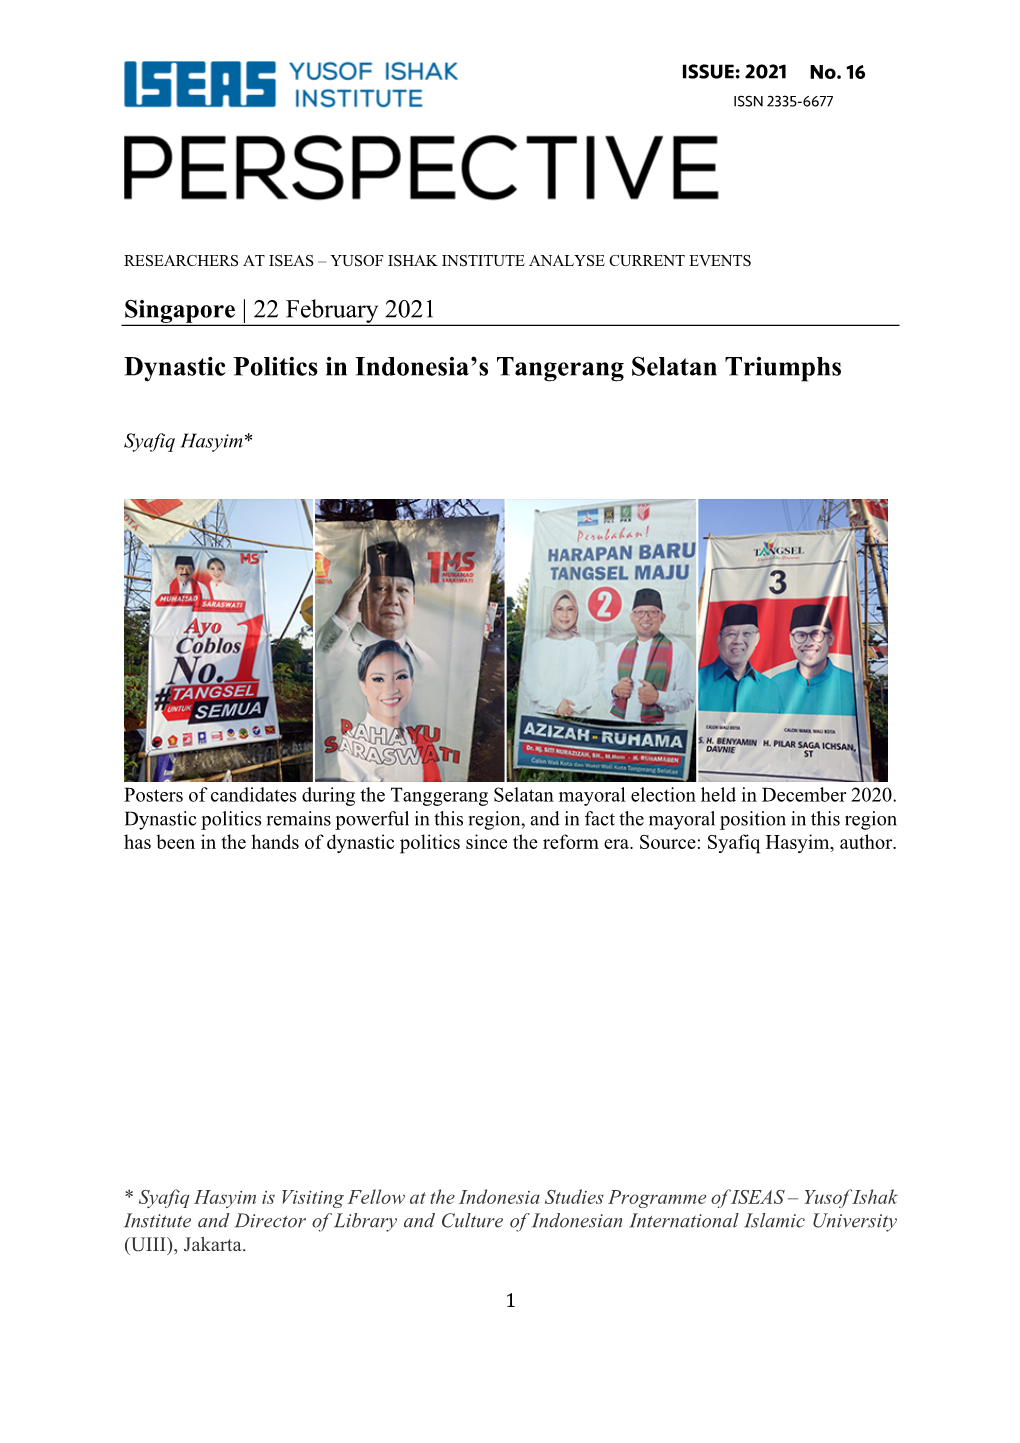 Dynastic Politics in Indonesia's Tangerang Selatan Triumphs